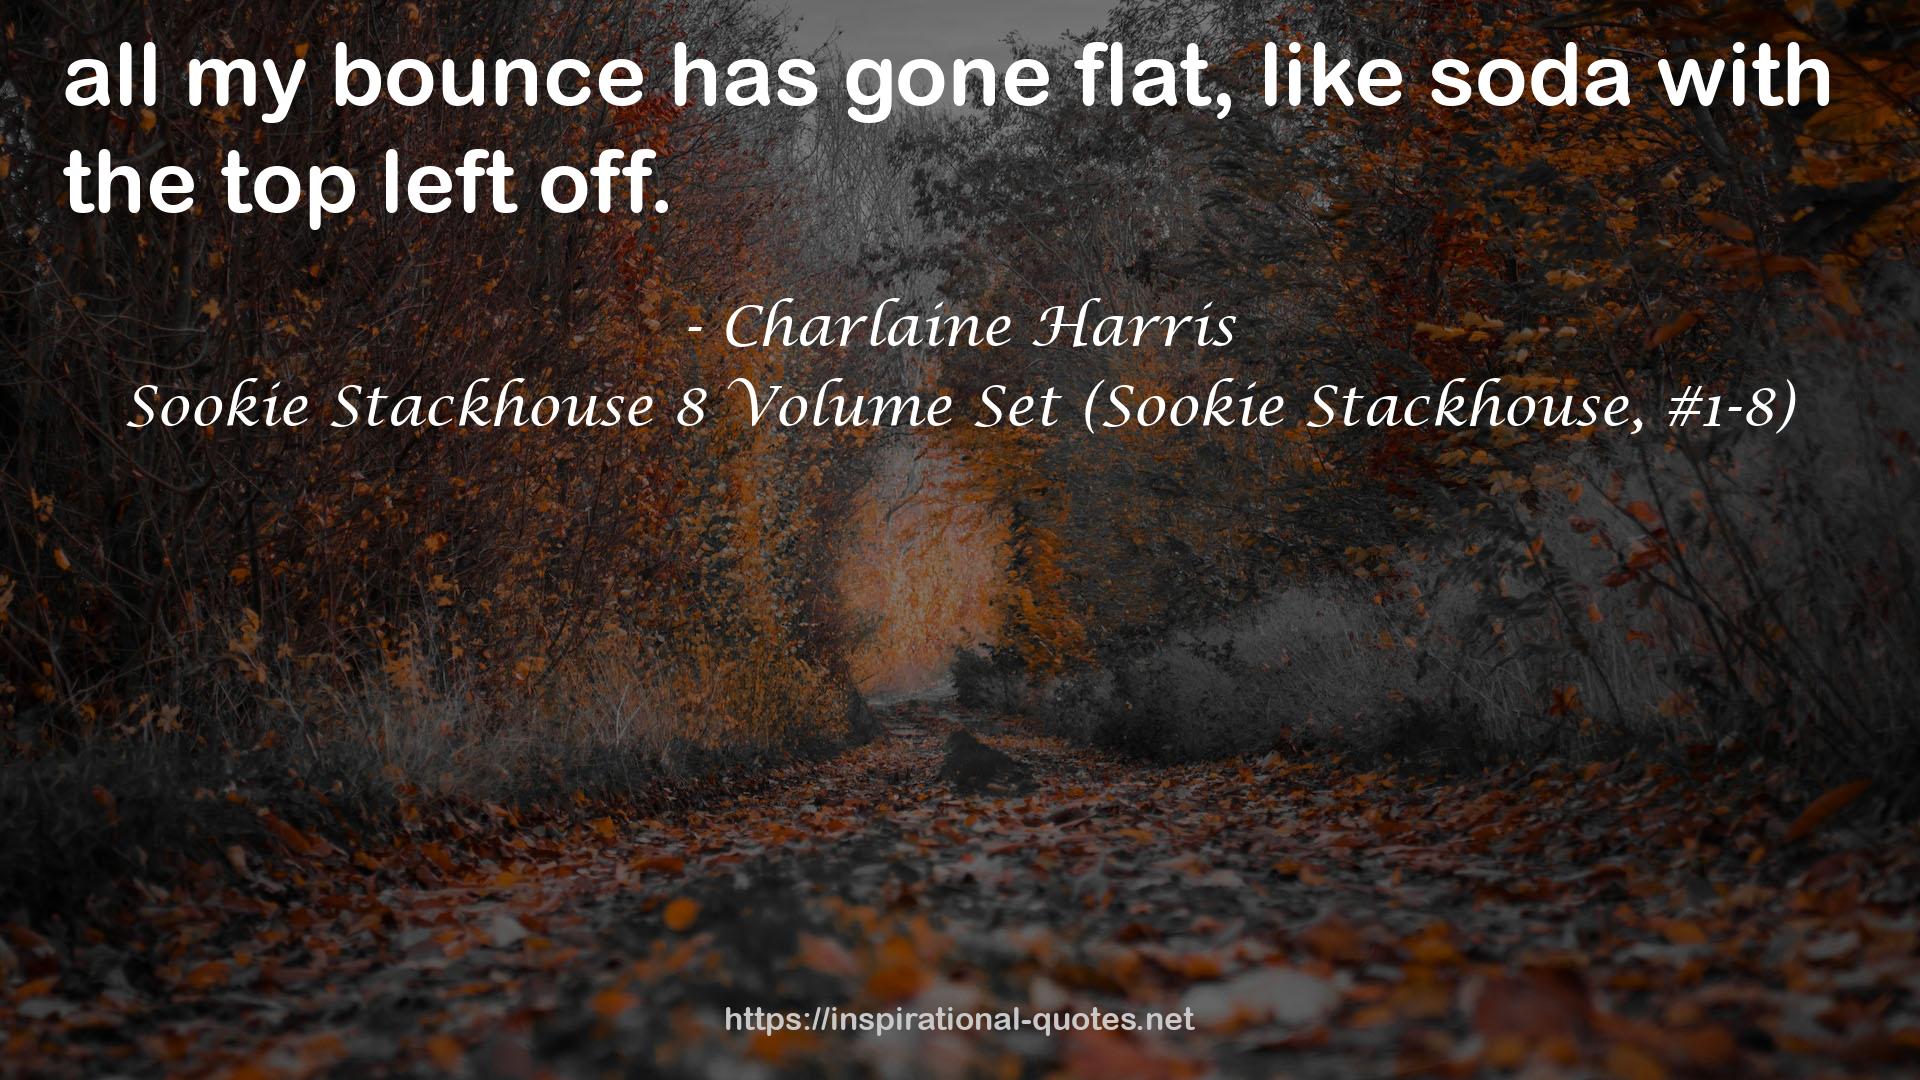 Sookie Stackhouse 8 Volume Set (Sookie Stackhouse, #1-8) QUOTES